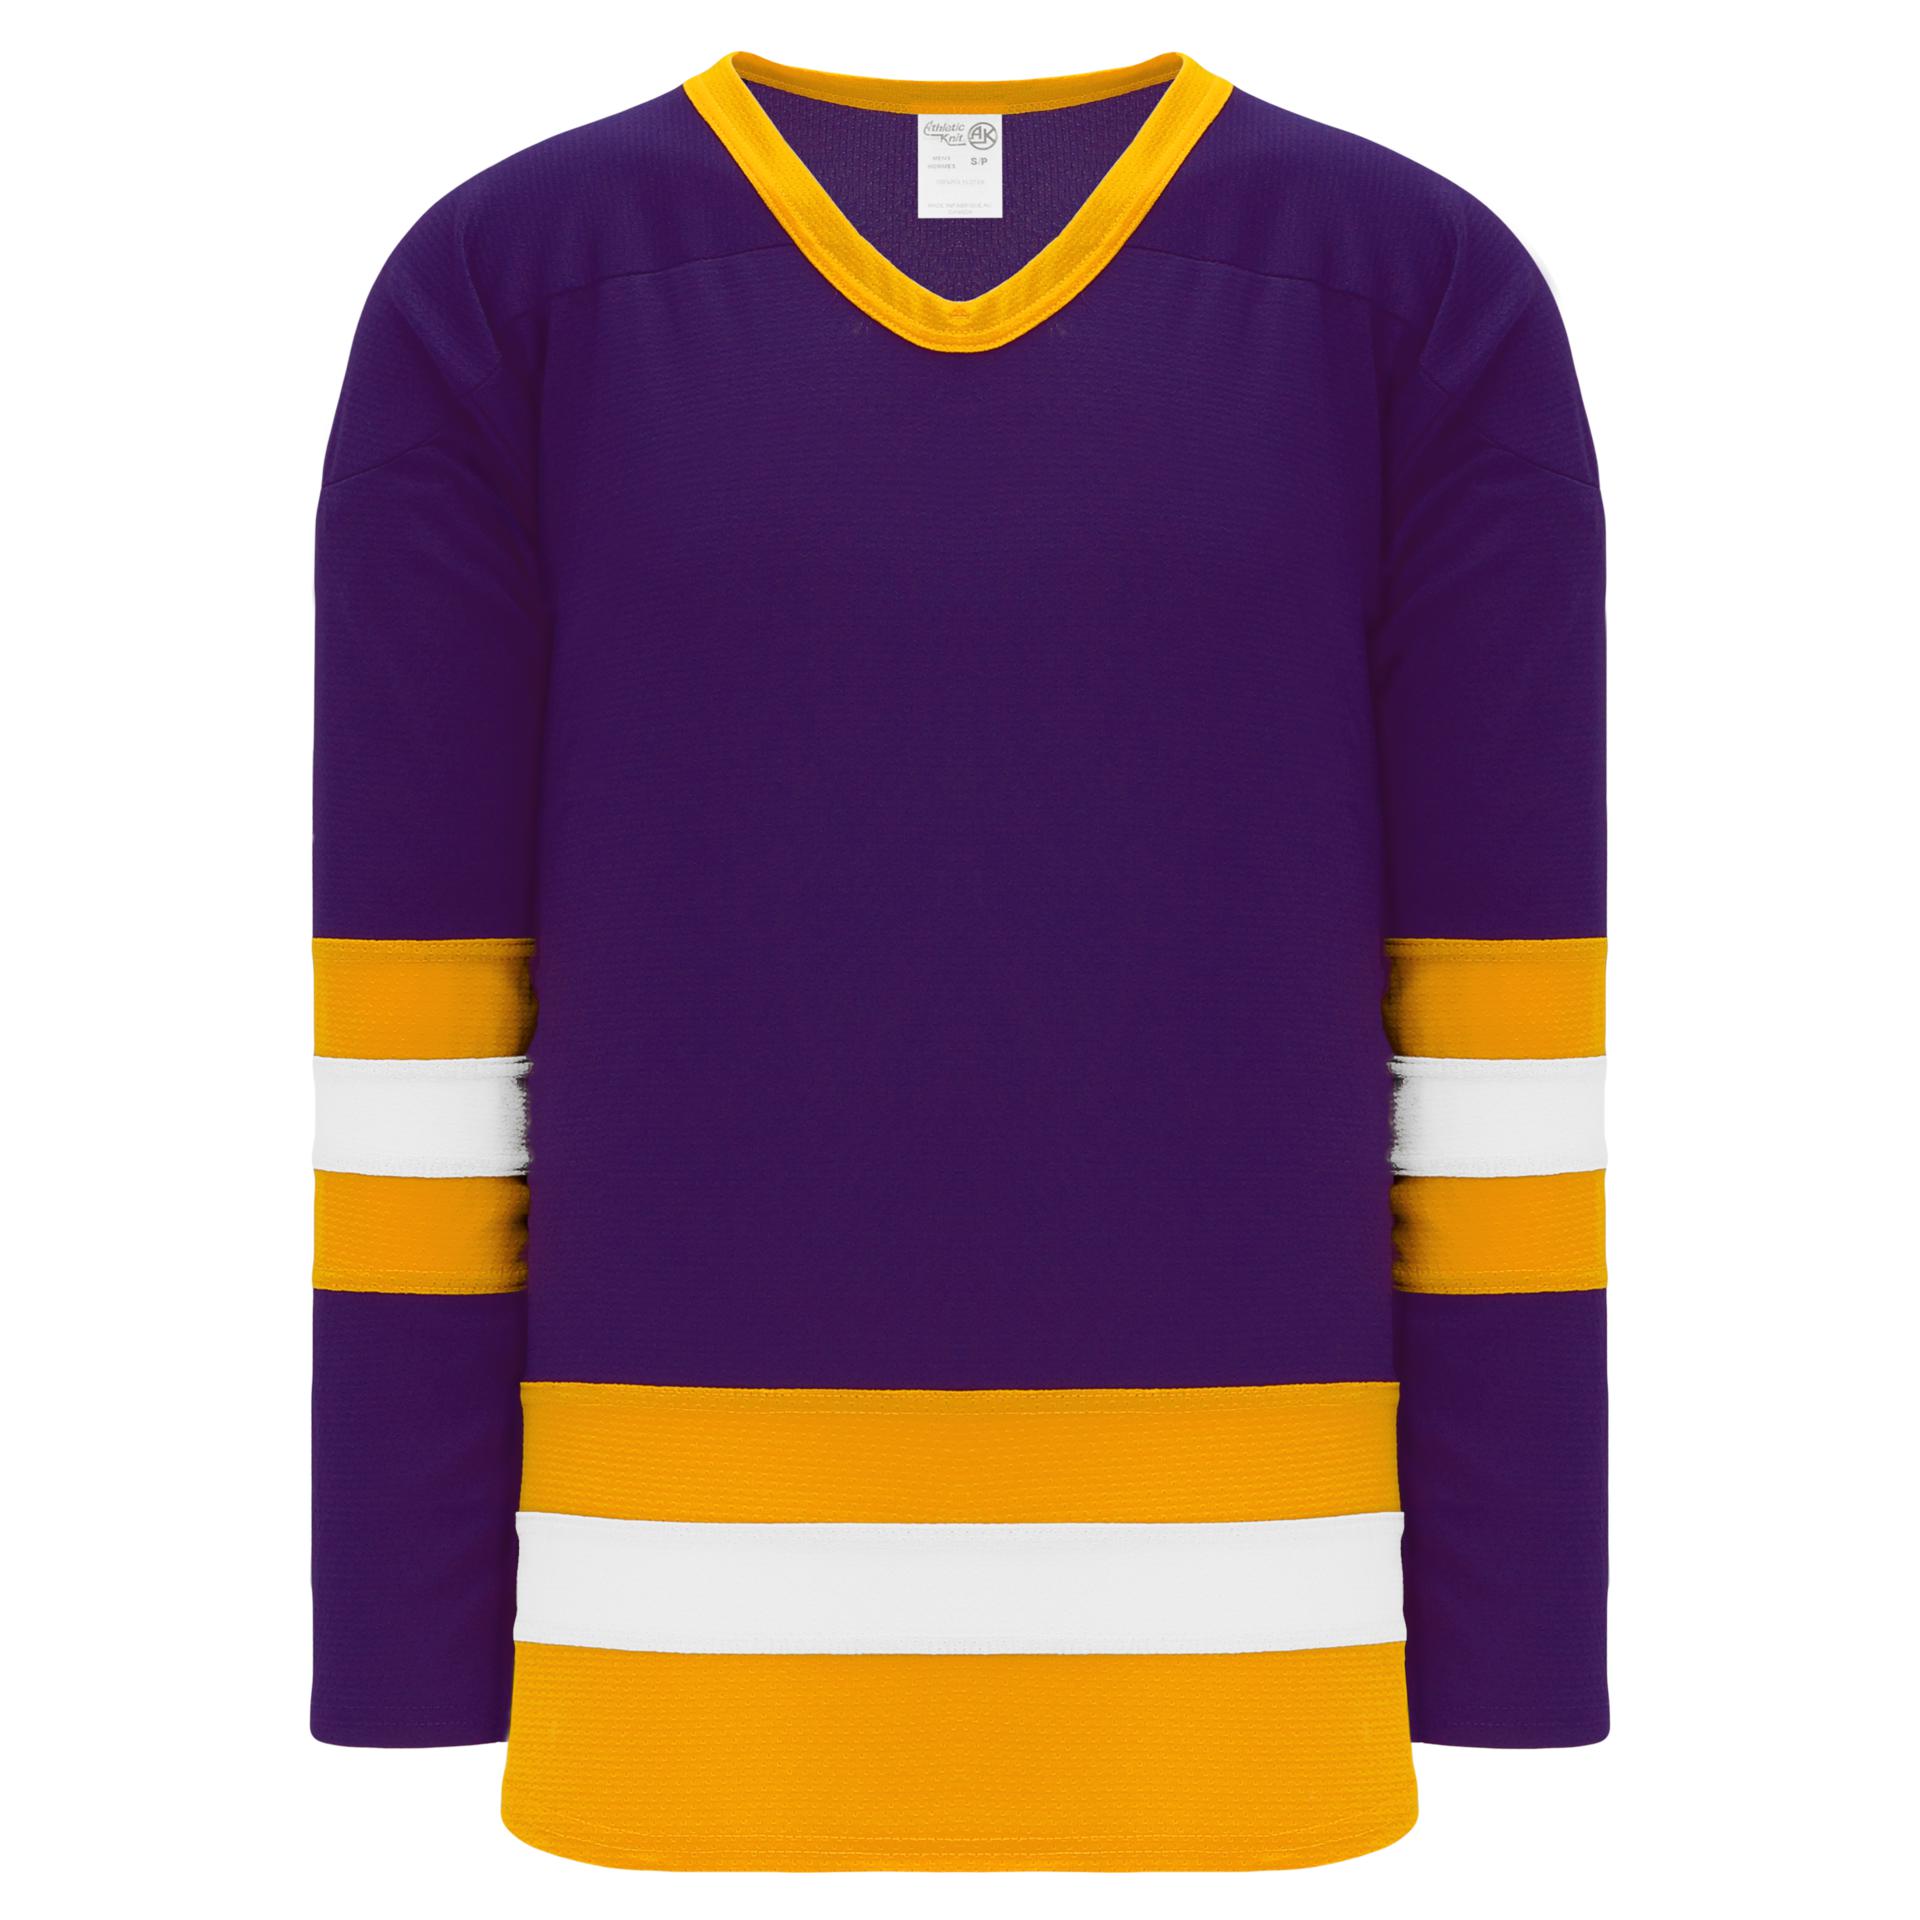 H6500-441 Purple/Gold/White League Style Blank Hockey Jerseys Adult Large